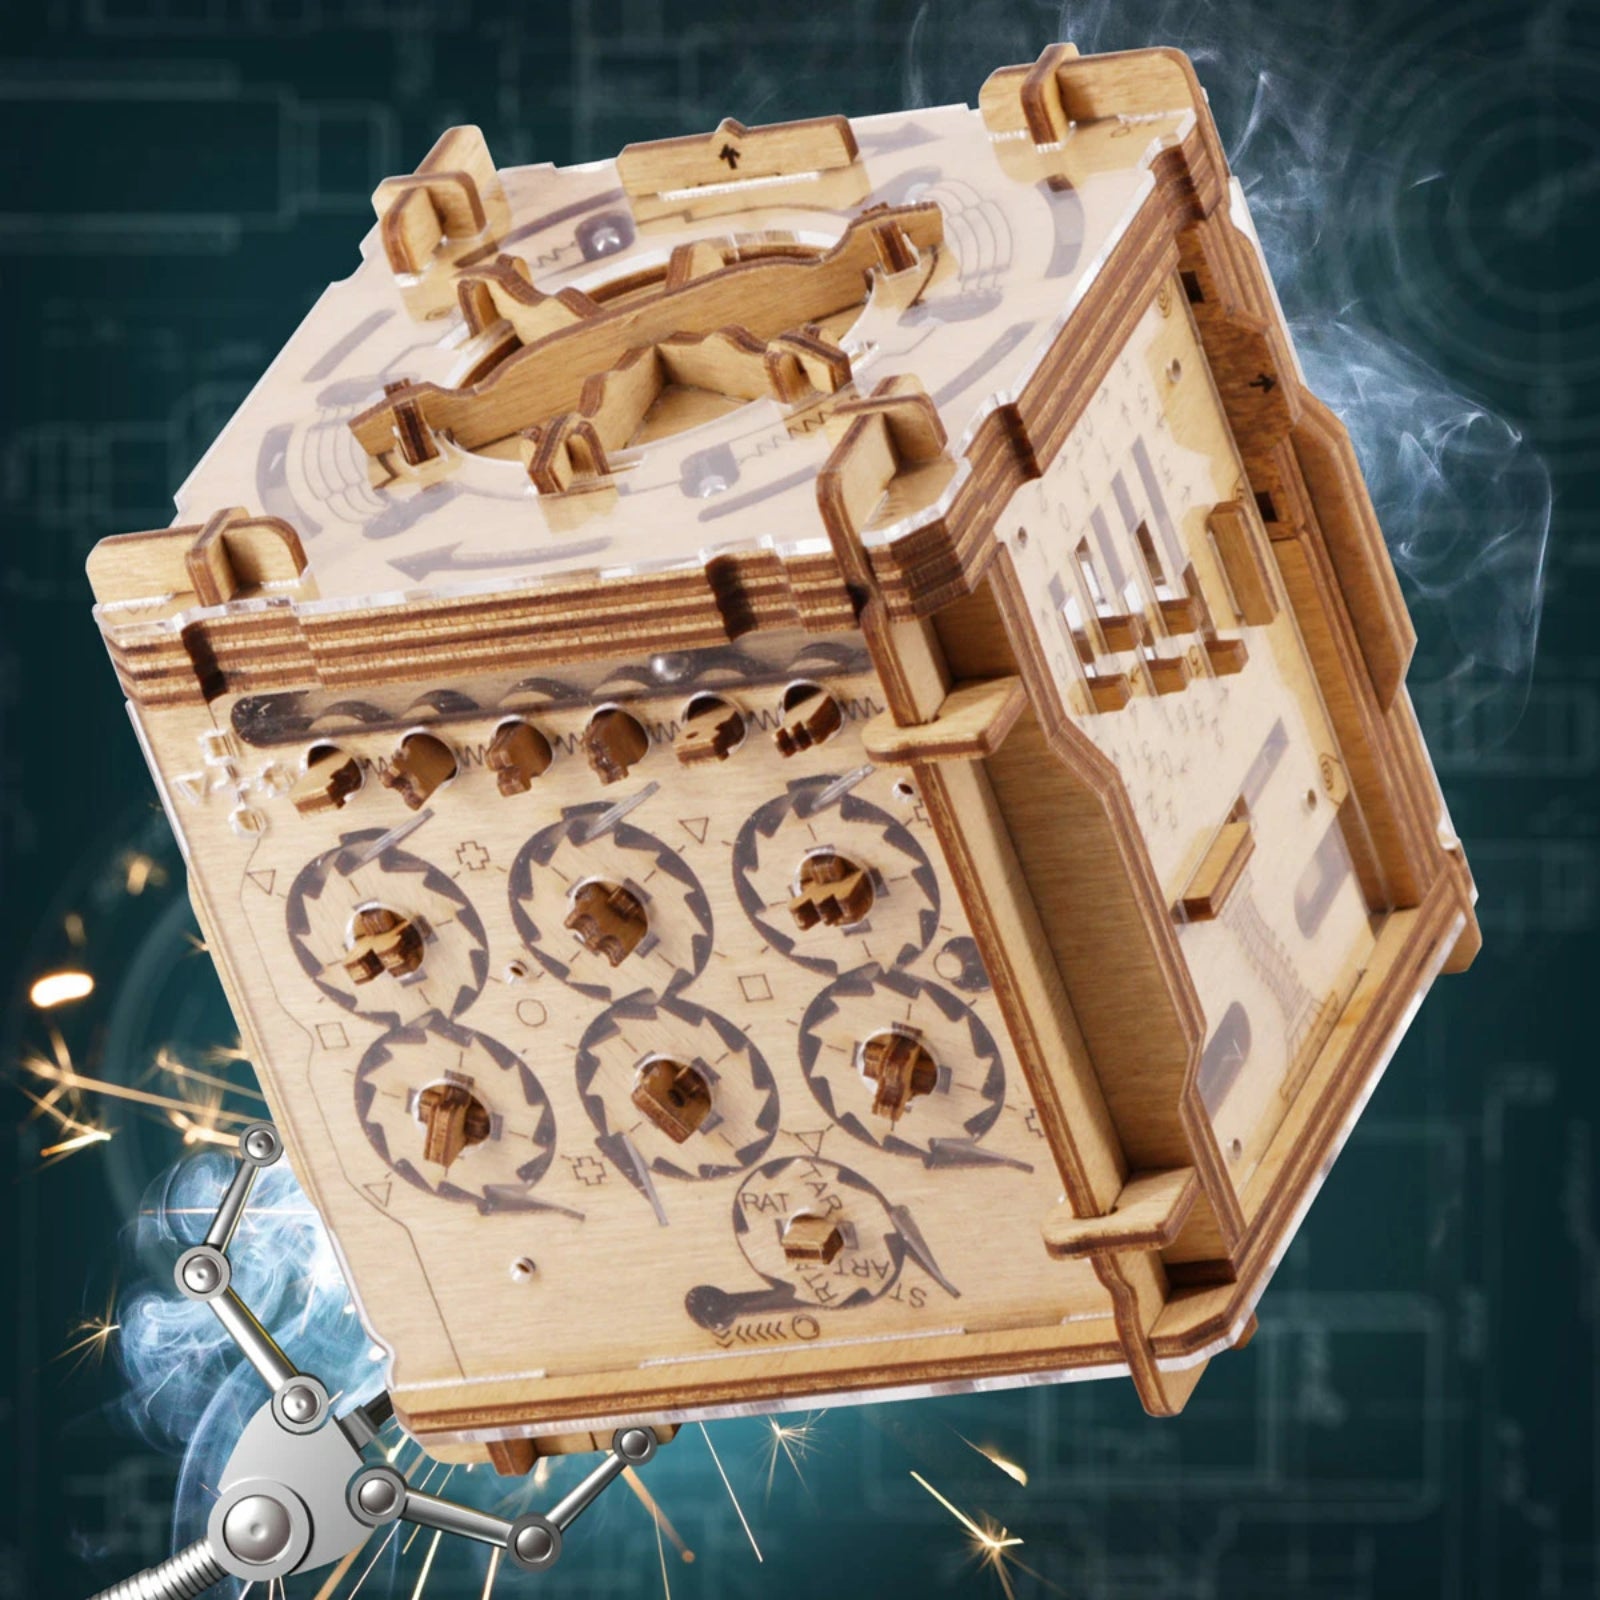 Cluebox - Davy Jones' Locker - Level 9 - iDventure - Escape Room in a  Box-Puzzle